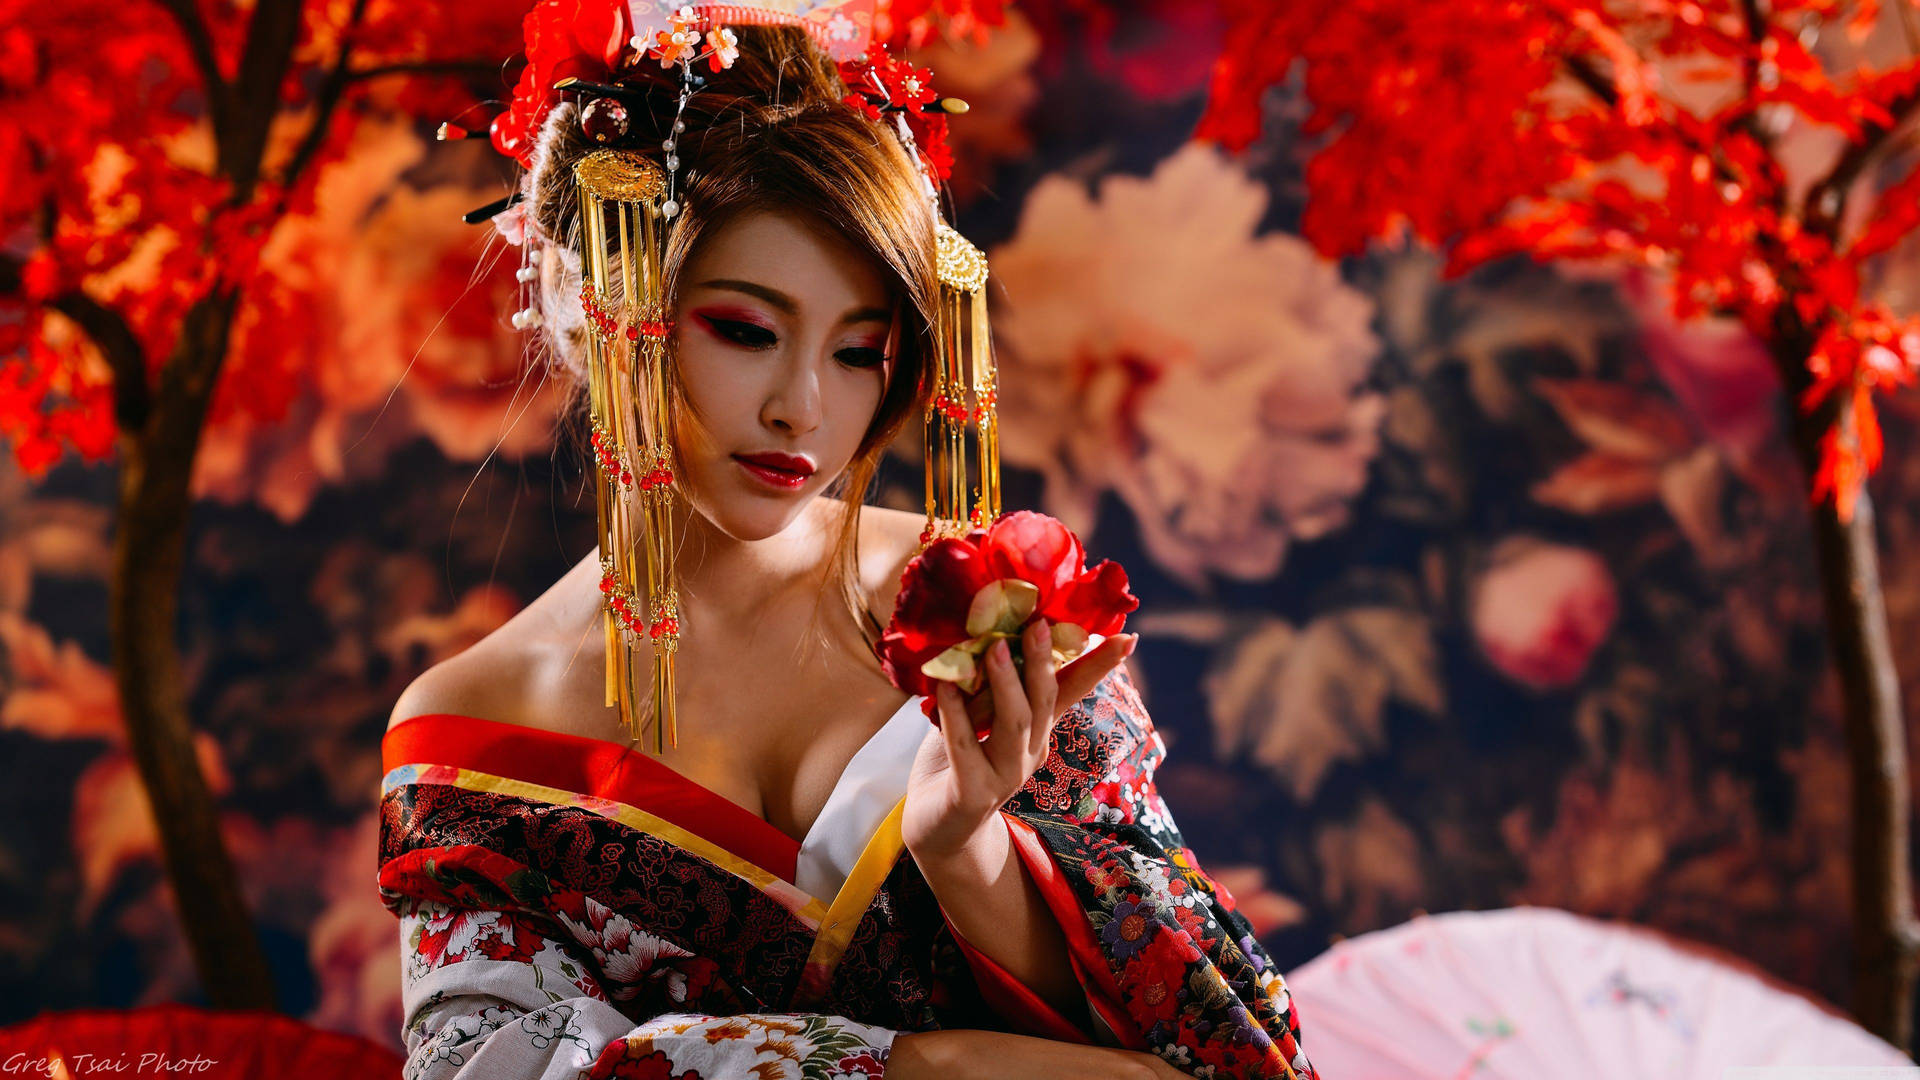 Japanese Girl With Red Flower Wallpaper